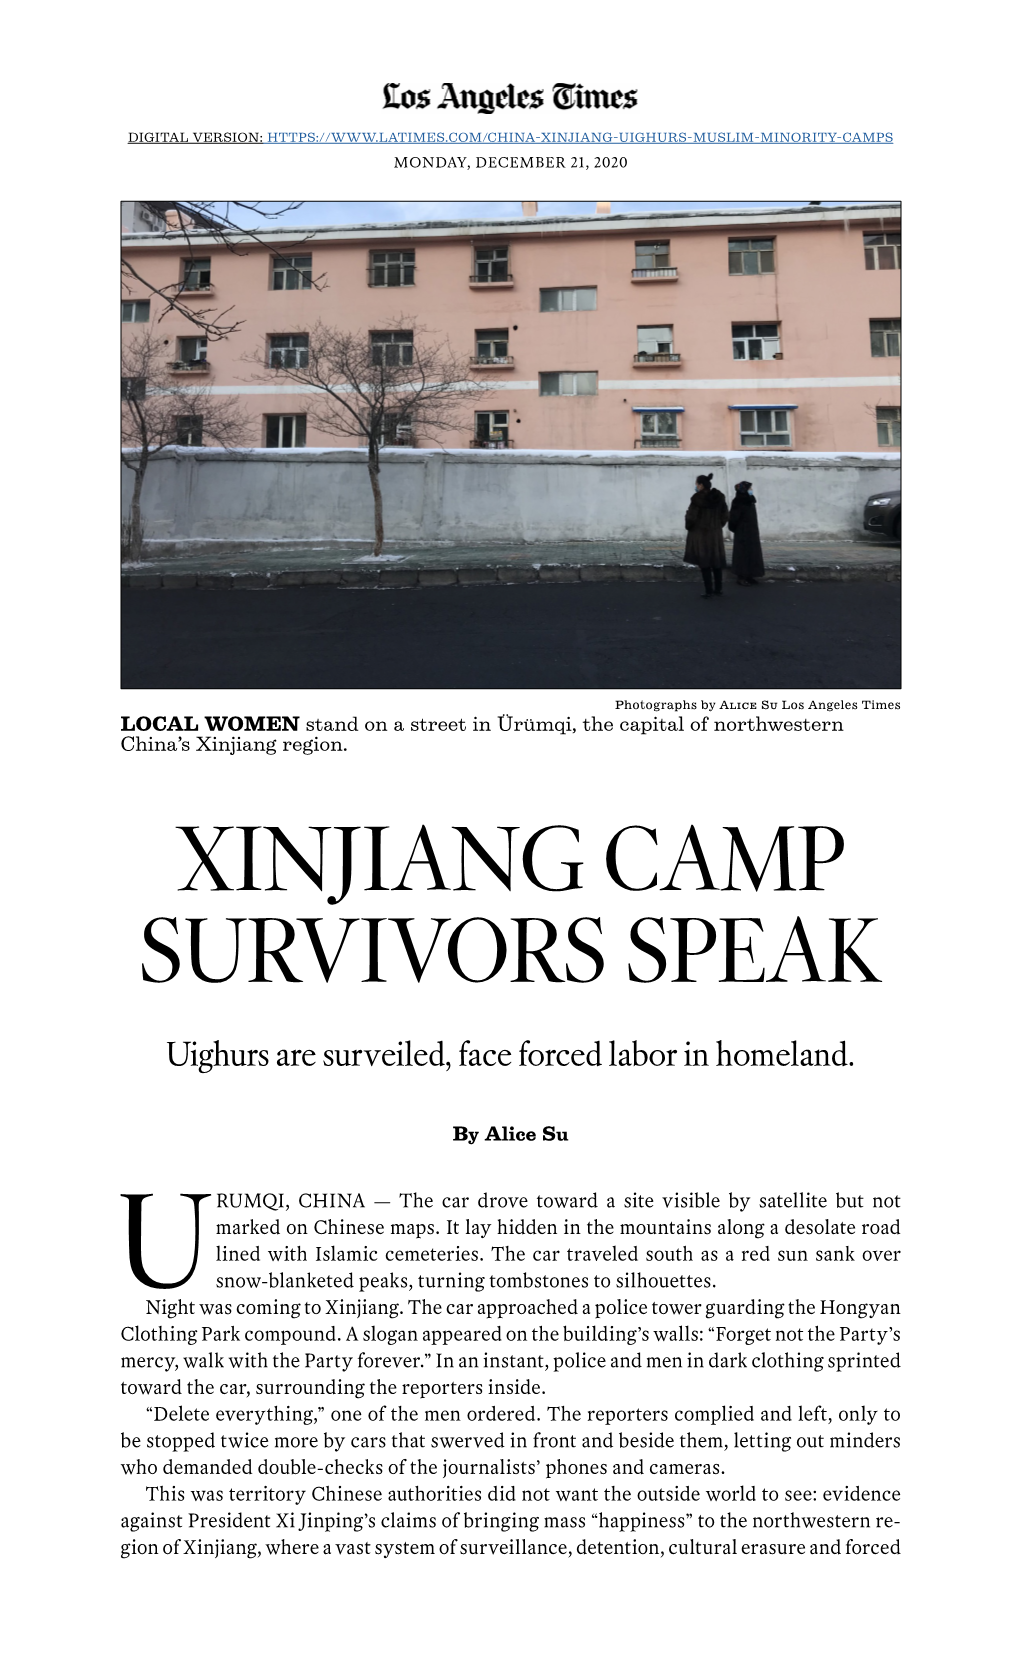 Xinjiang Camp Survivors Speak